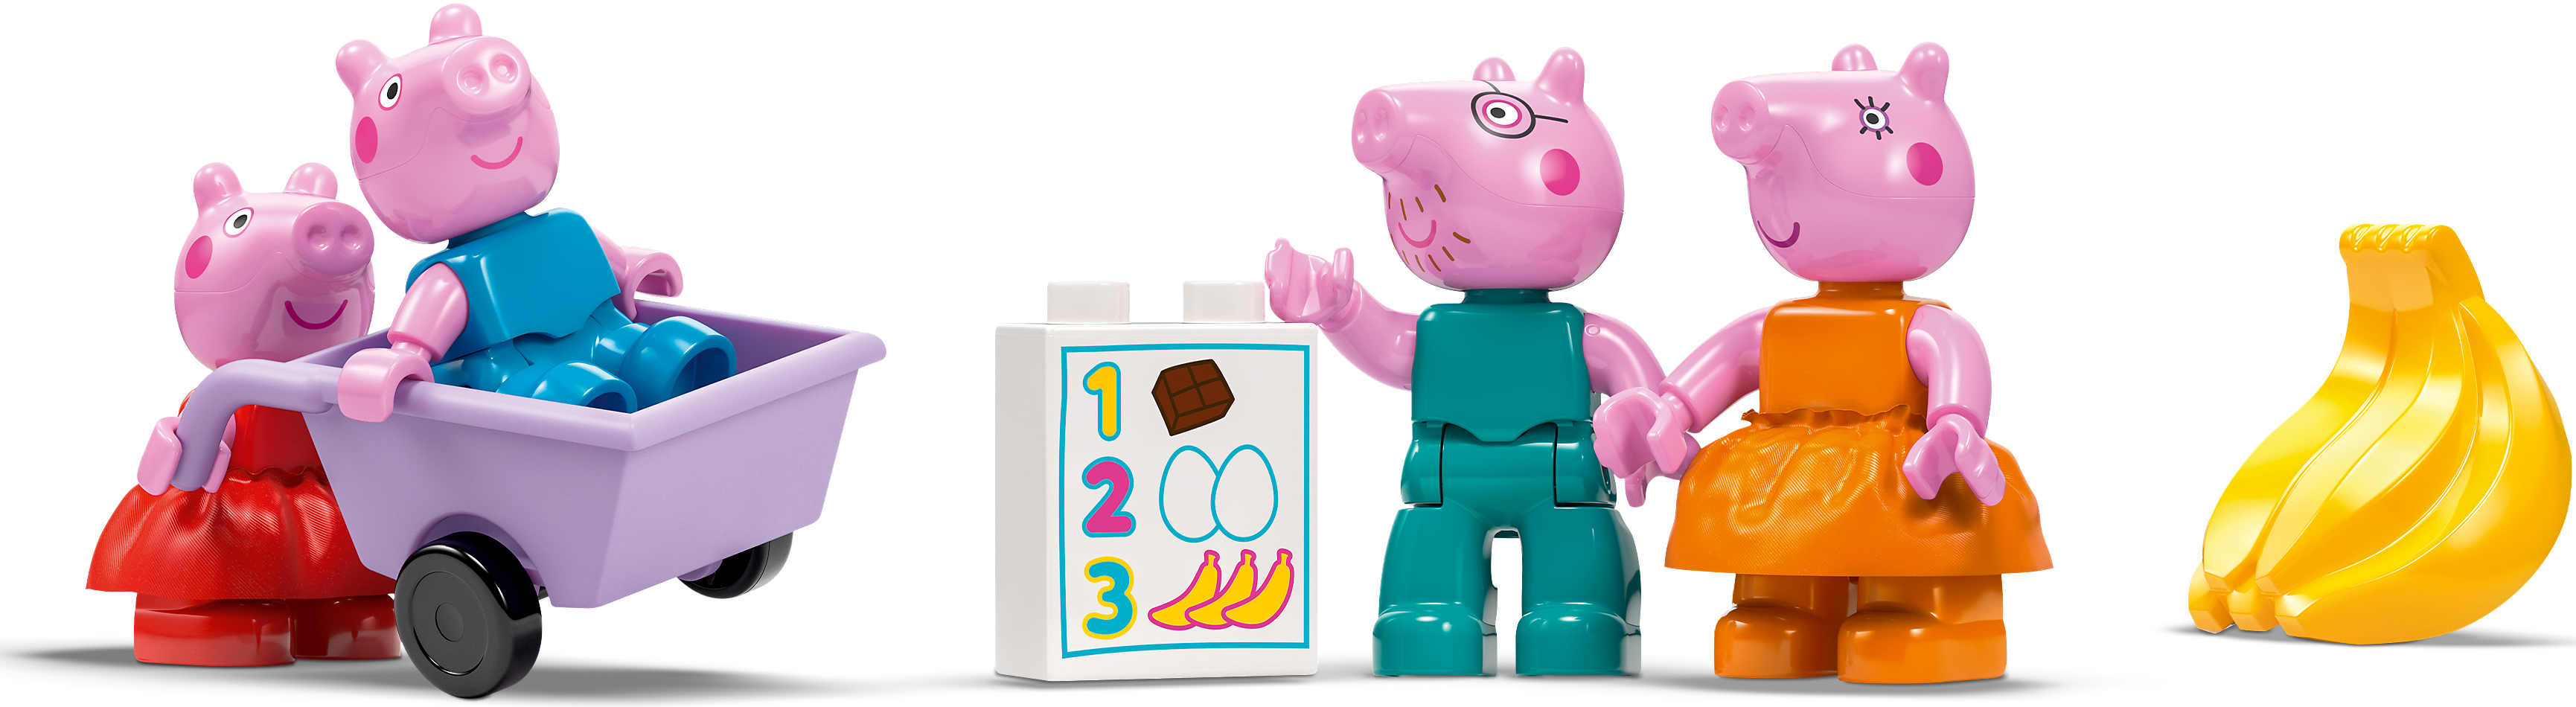 10434 Lego Duplo Peppa Pig Супермаркет Пеппифото7